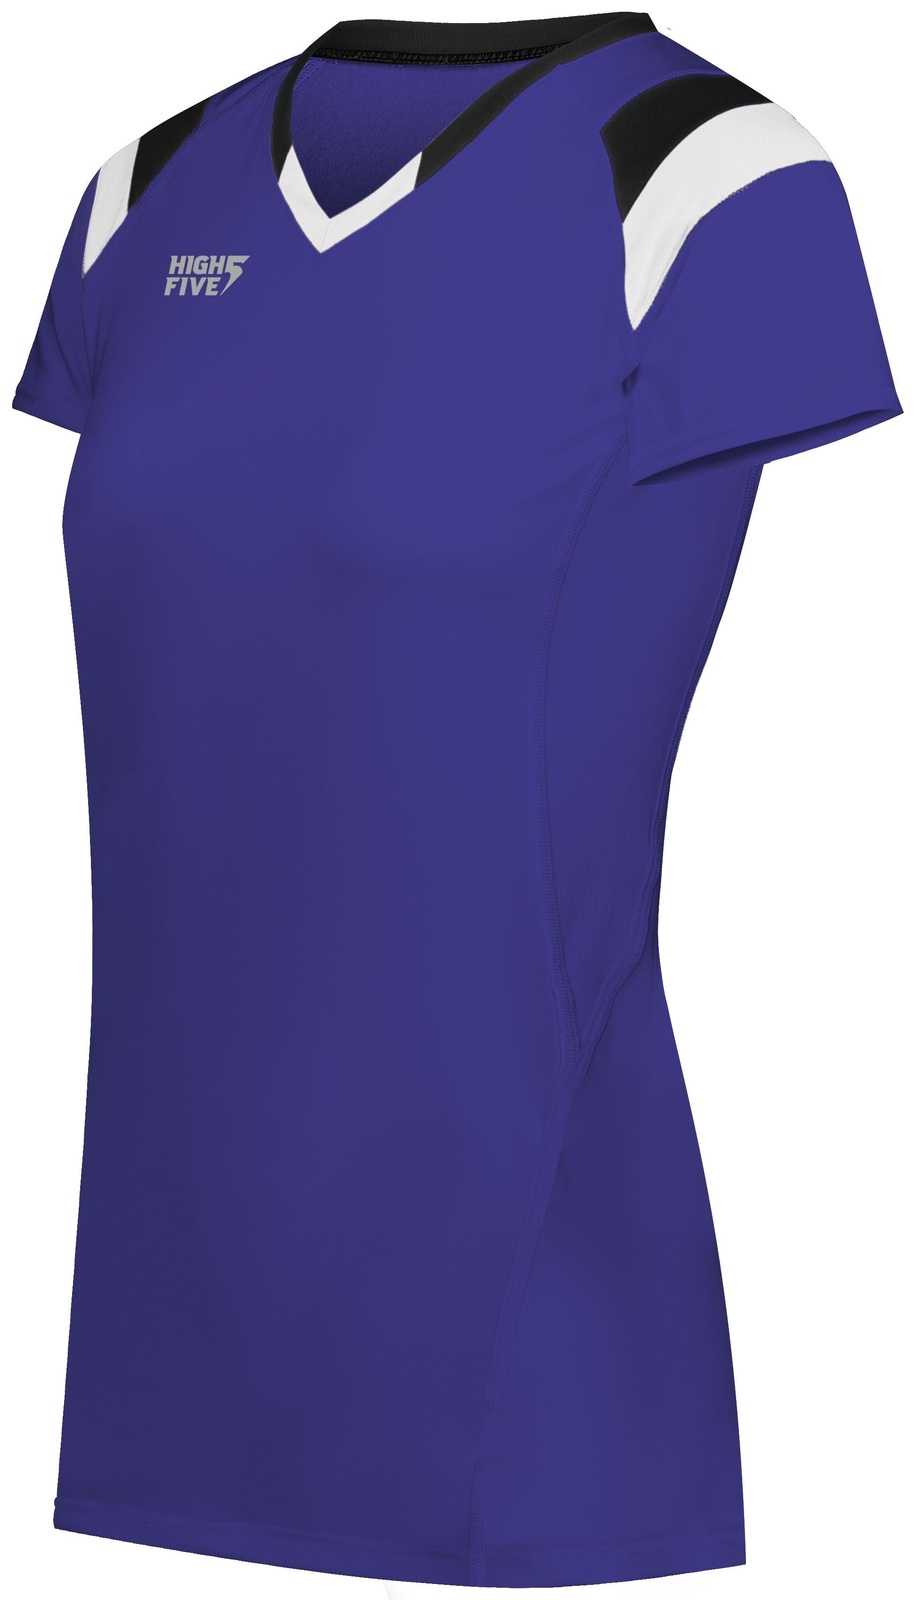 High Five 342252 Ladies TruHit Tri Short Sleeve Jersey - Purple Black White - HIT a Double